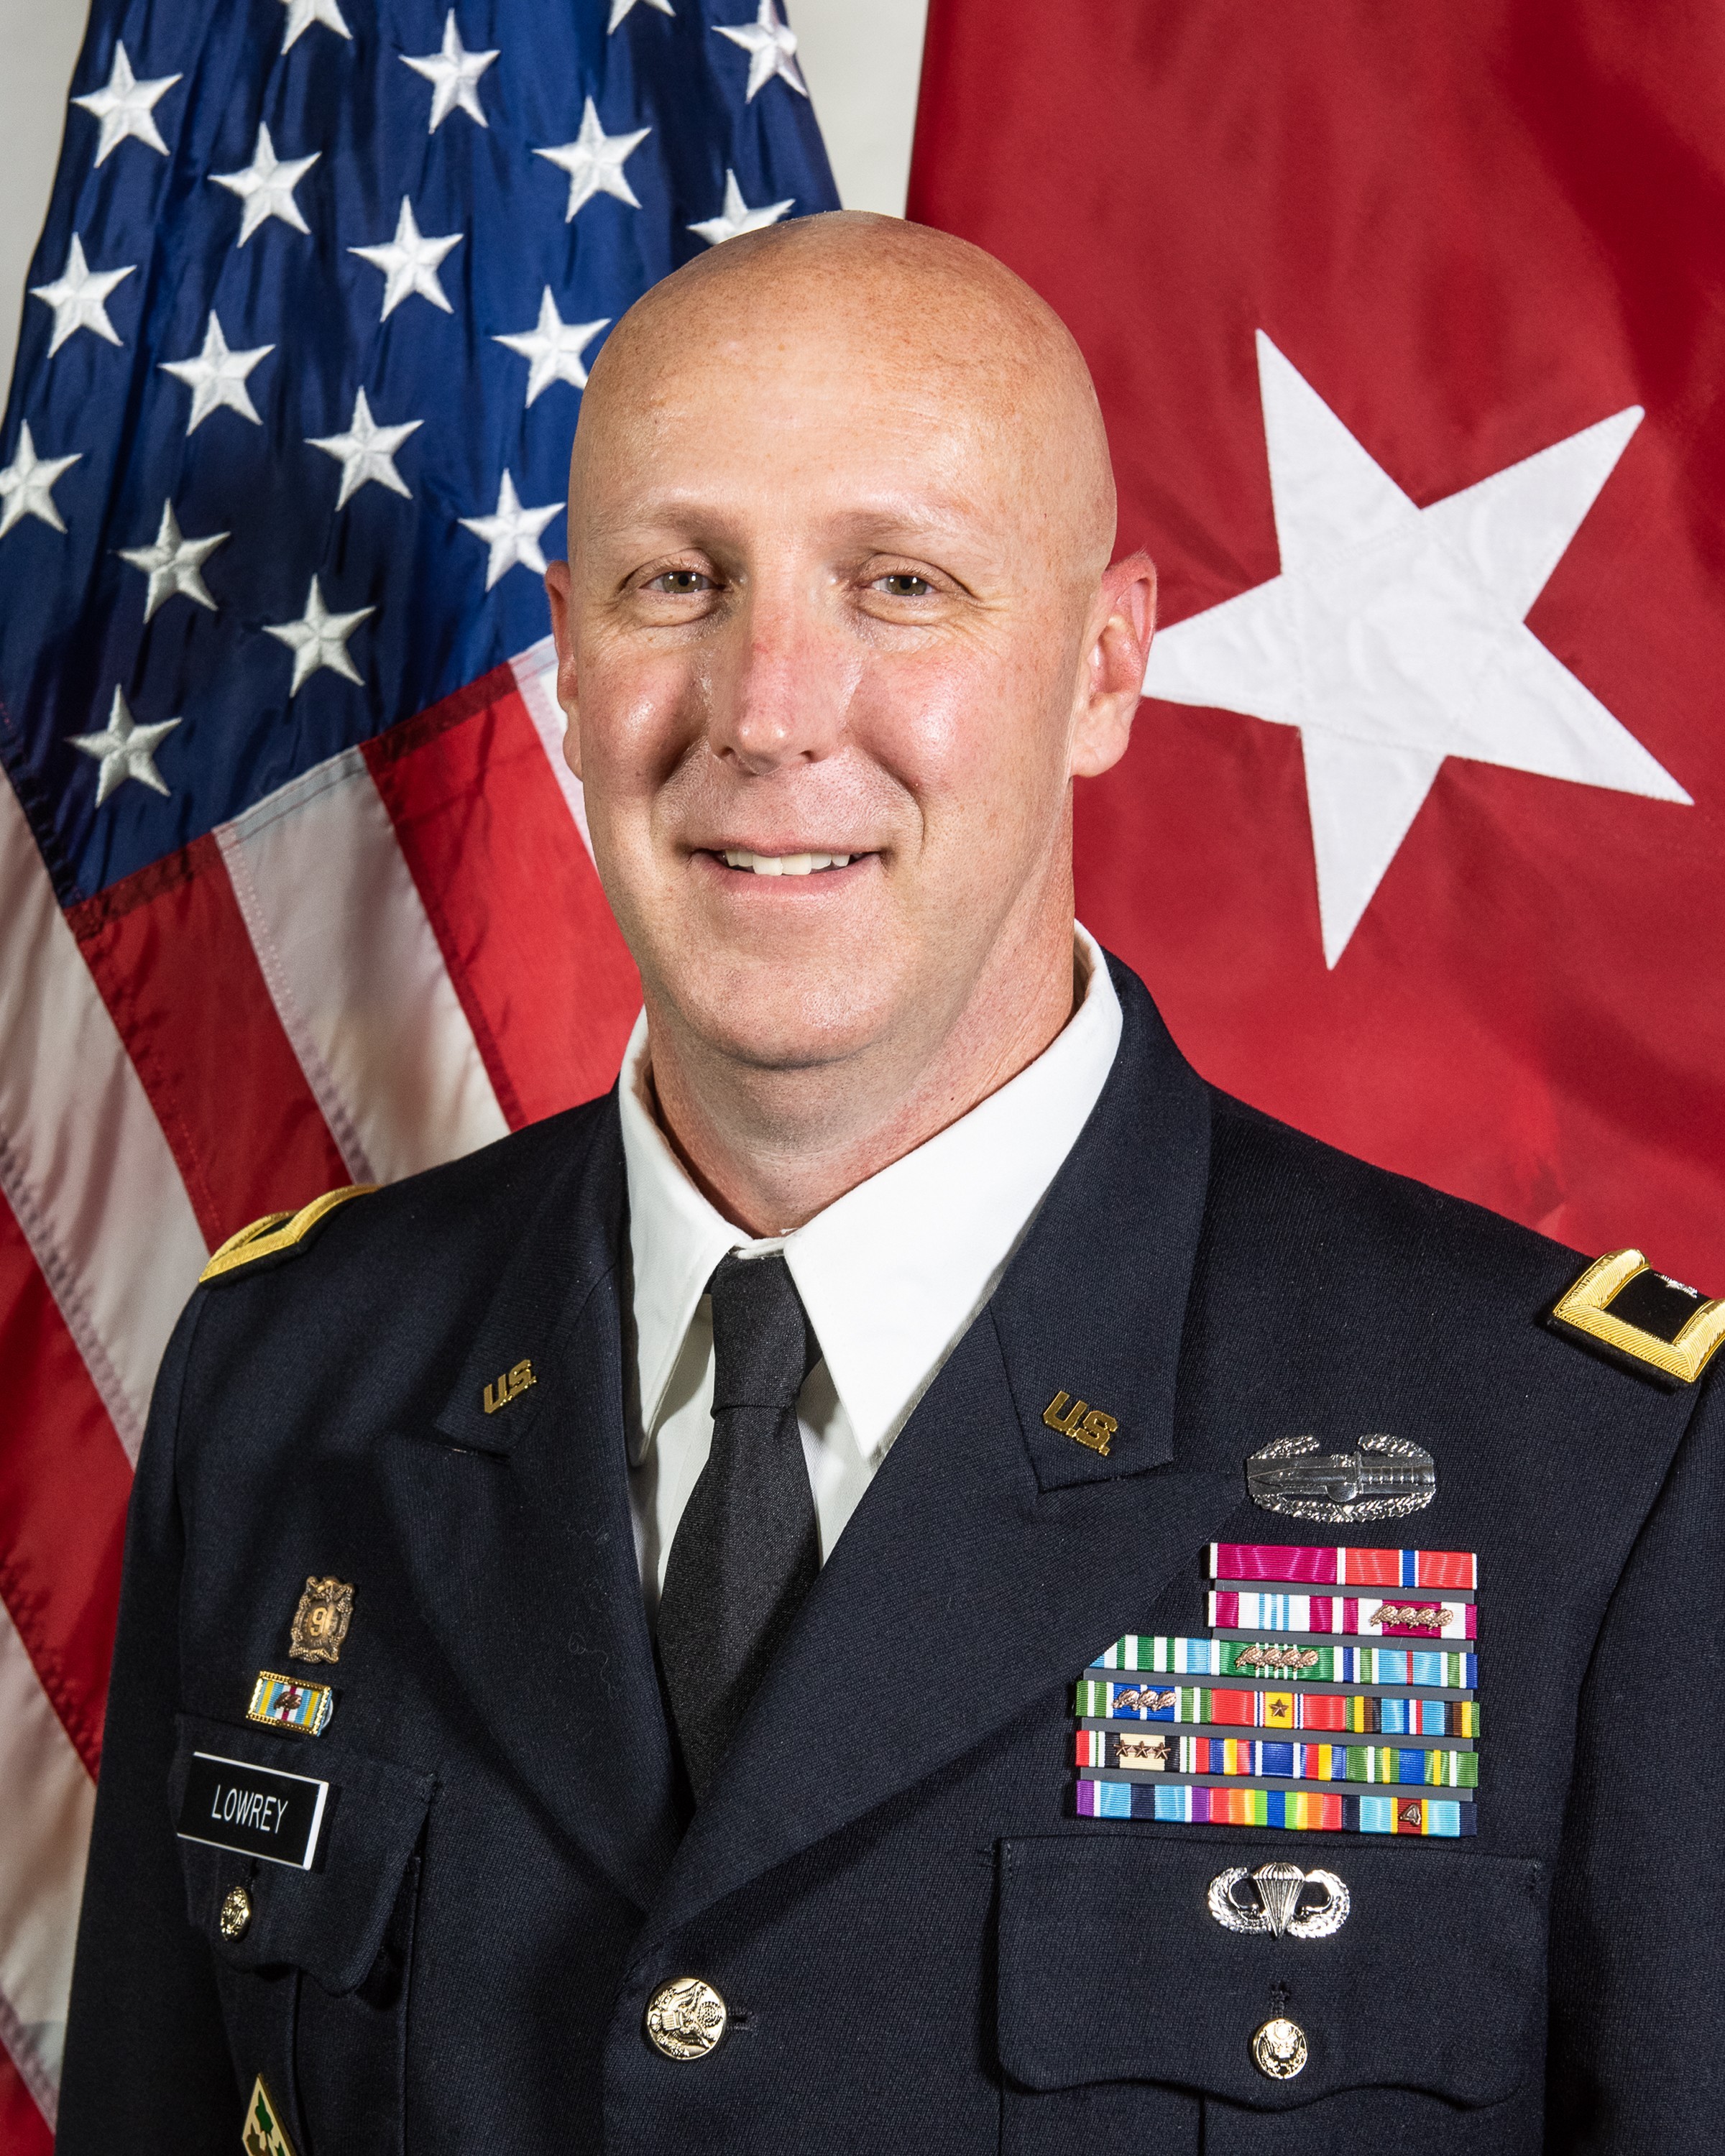 Brig. Gen. Douglas S. Lowrey